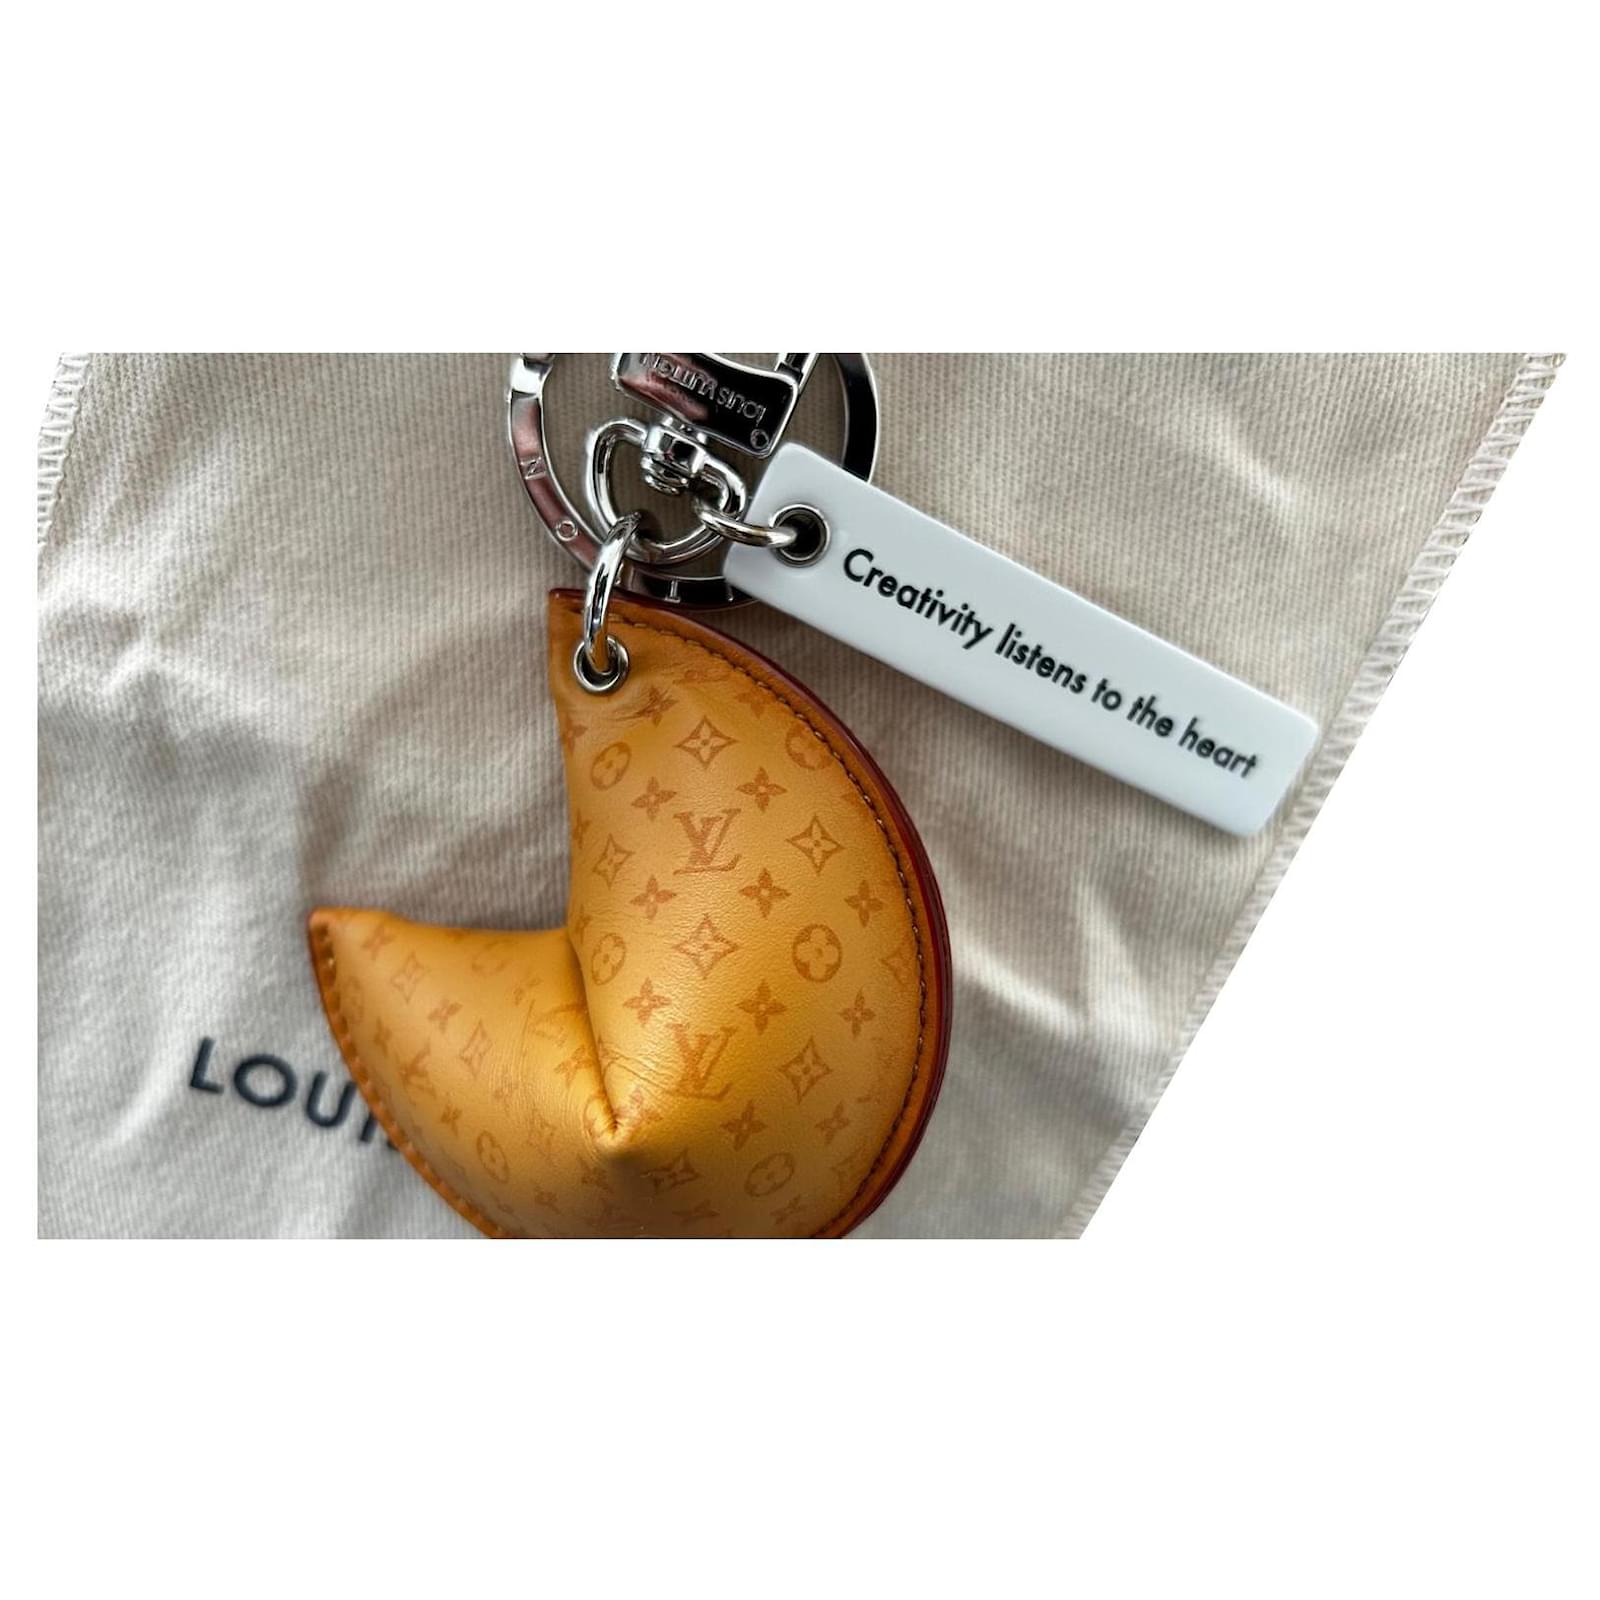 Louis Vuitton Fortune Cookie